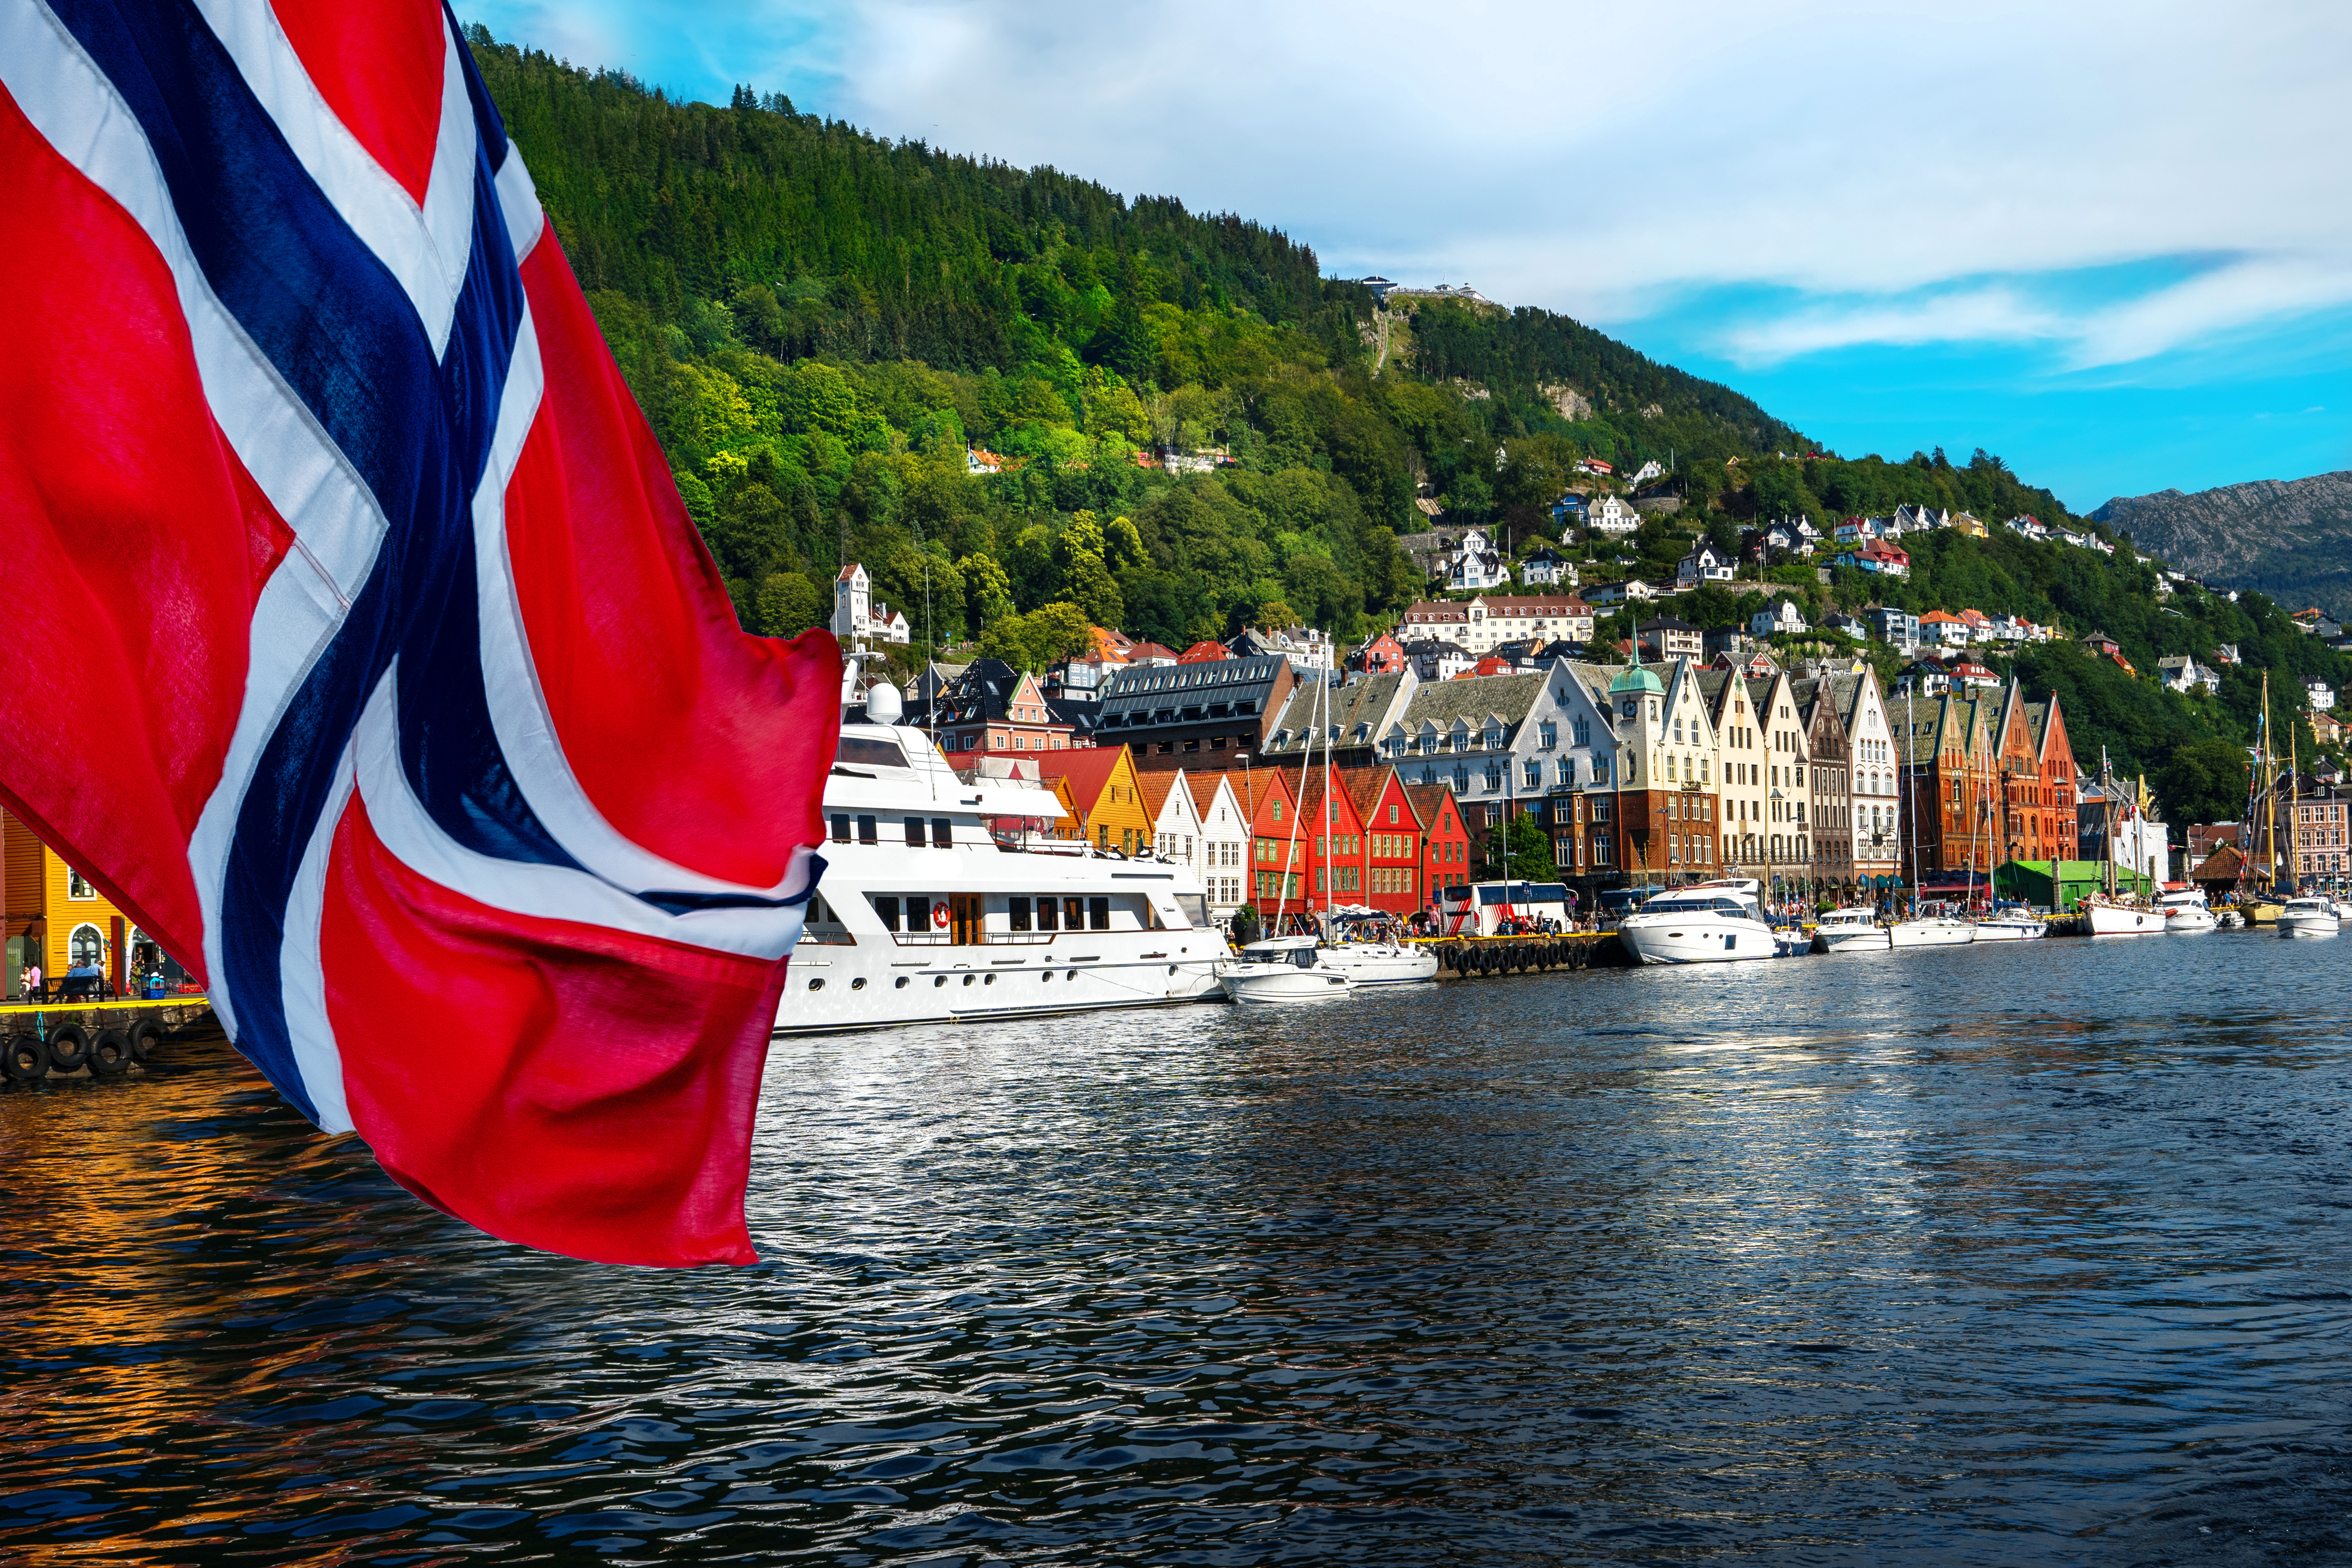 The flag symbolizes Norwegian citizenship